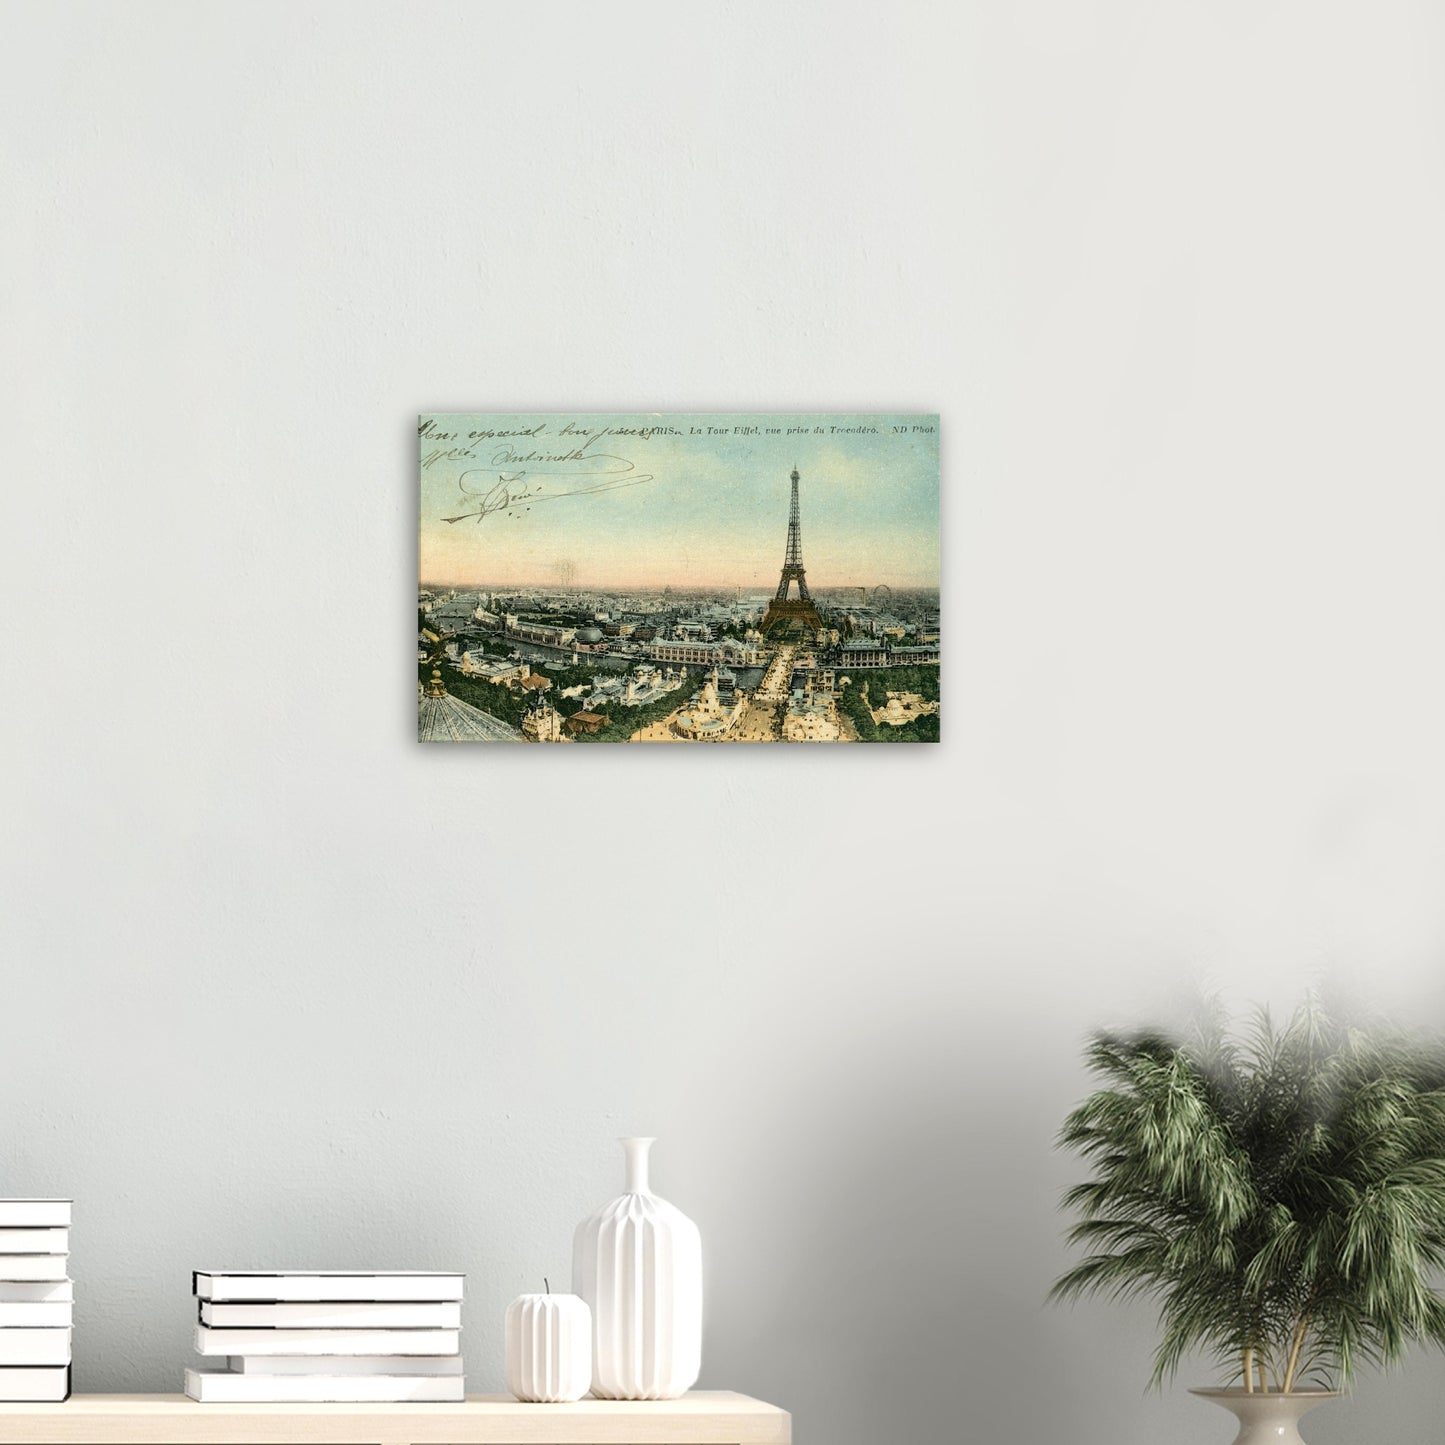 Panoramic view of Paris